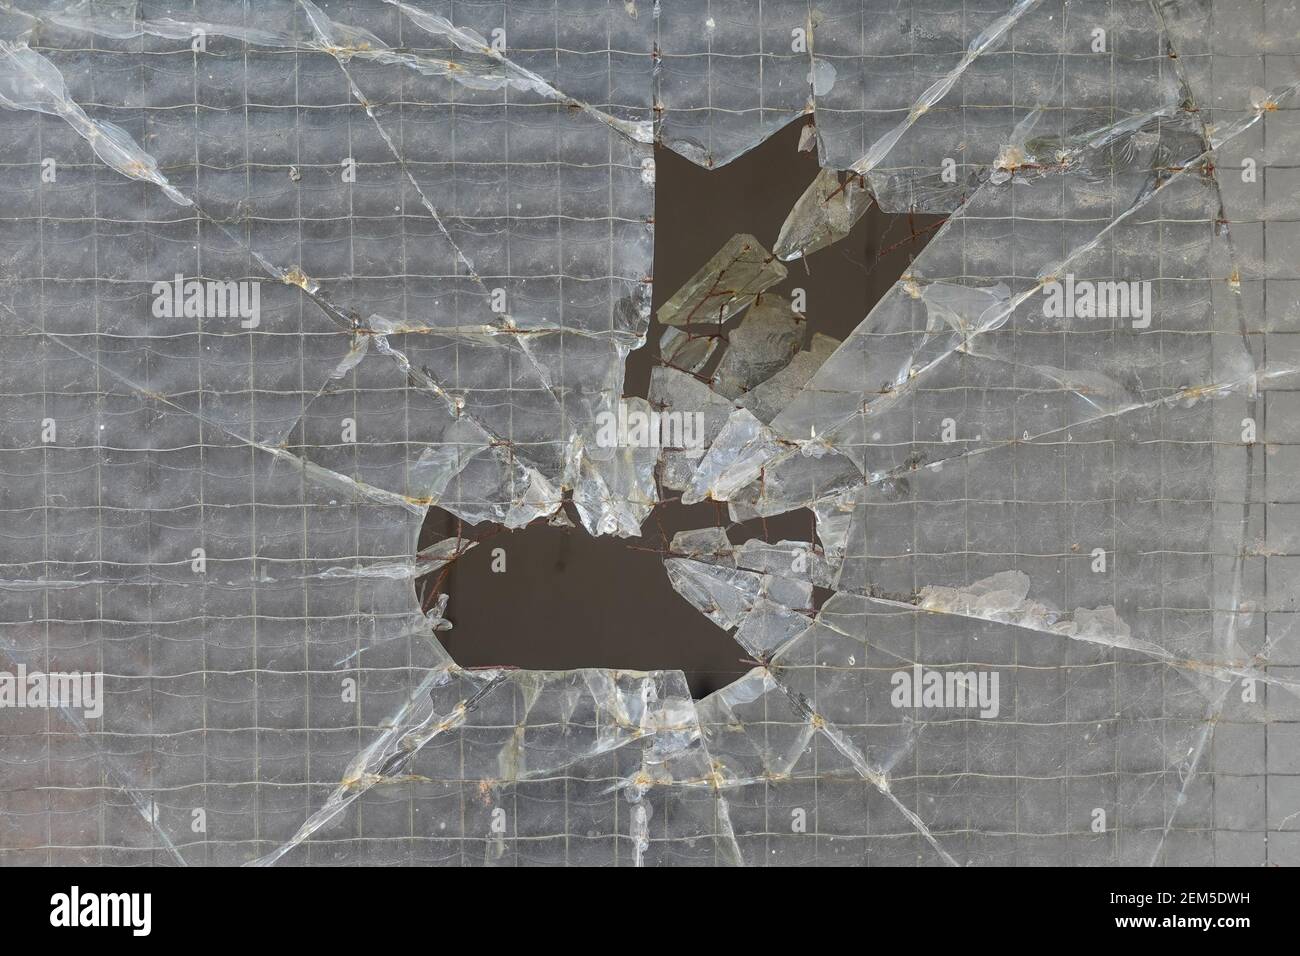 Broken wire mesh safety glass window. Background texture. Stock Photo